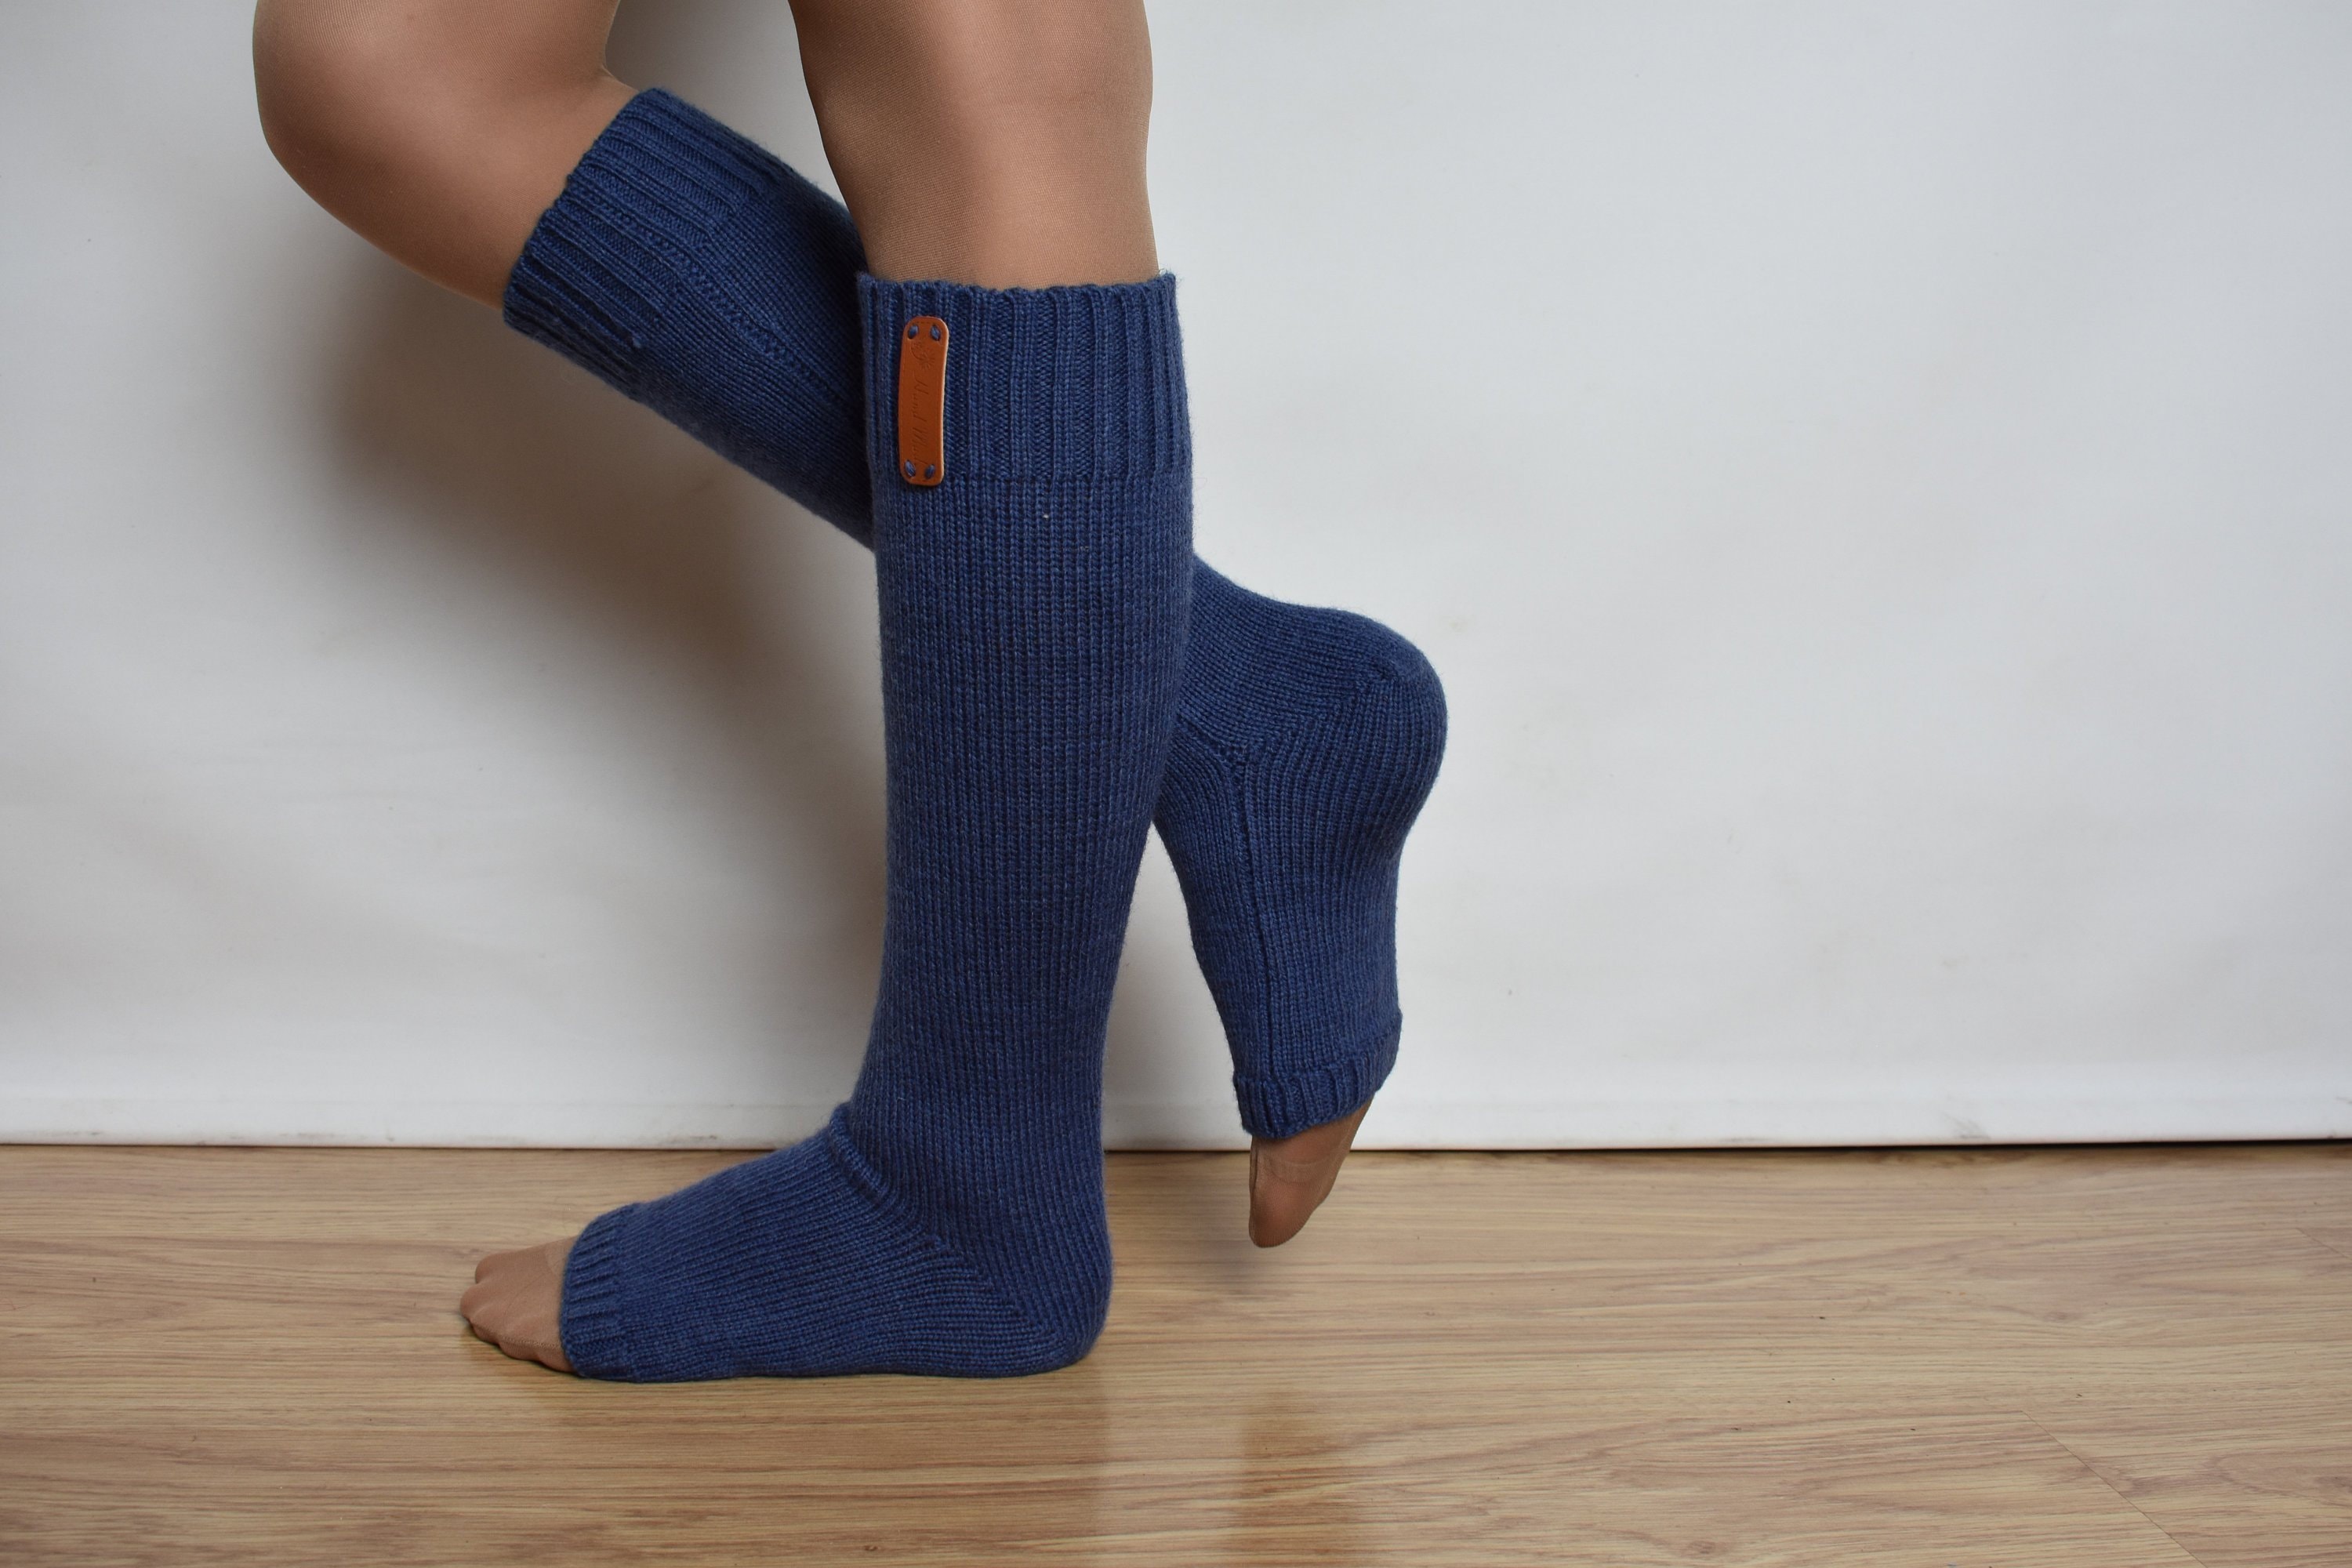 Super Comfortable Toeless Socks-2 Pairs Perfect Yoga Socks, Dance Socks,  Exercise Socks, Pedicure Socks, and More 